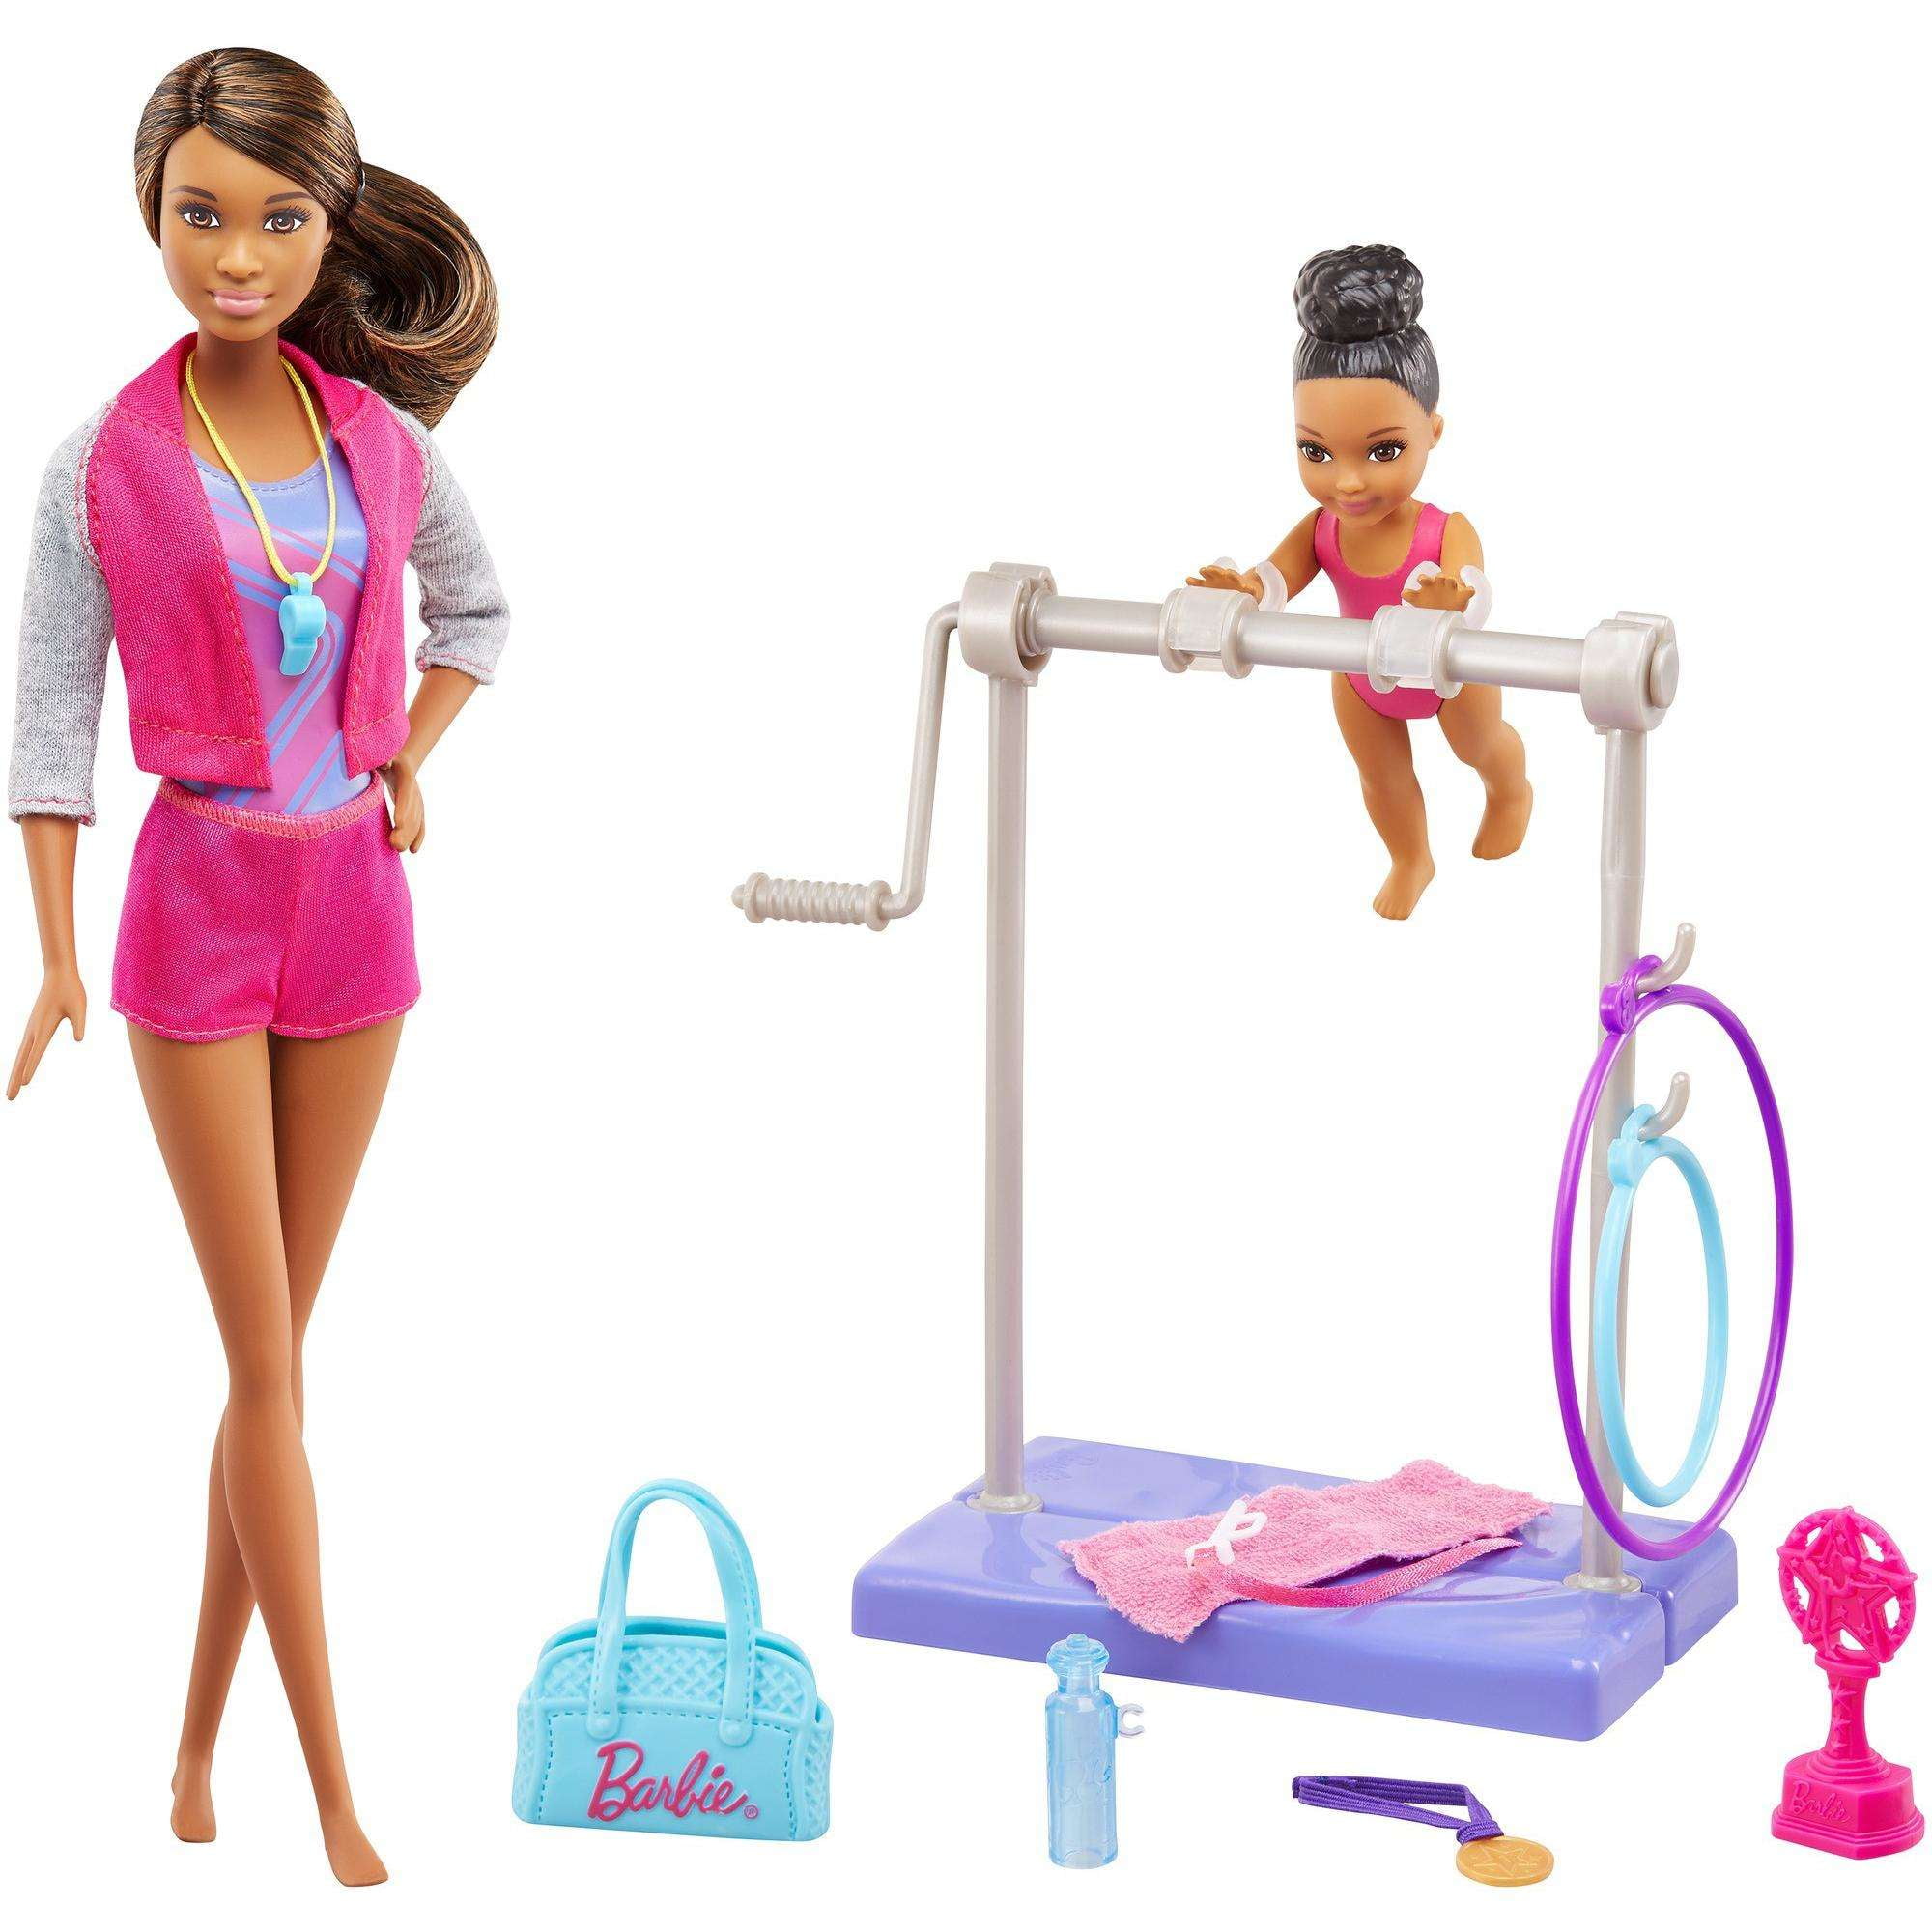 Barbie Gymnastics Playset With Coach Barbie Doll Small Gymnast Doll ...